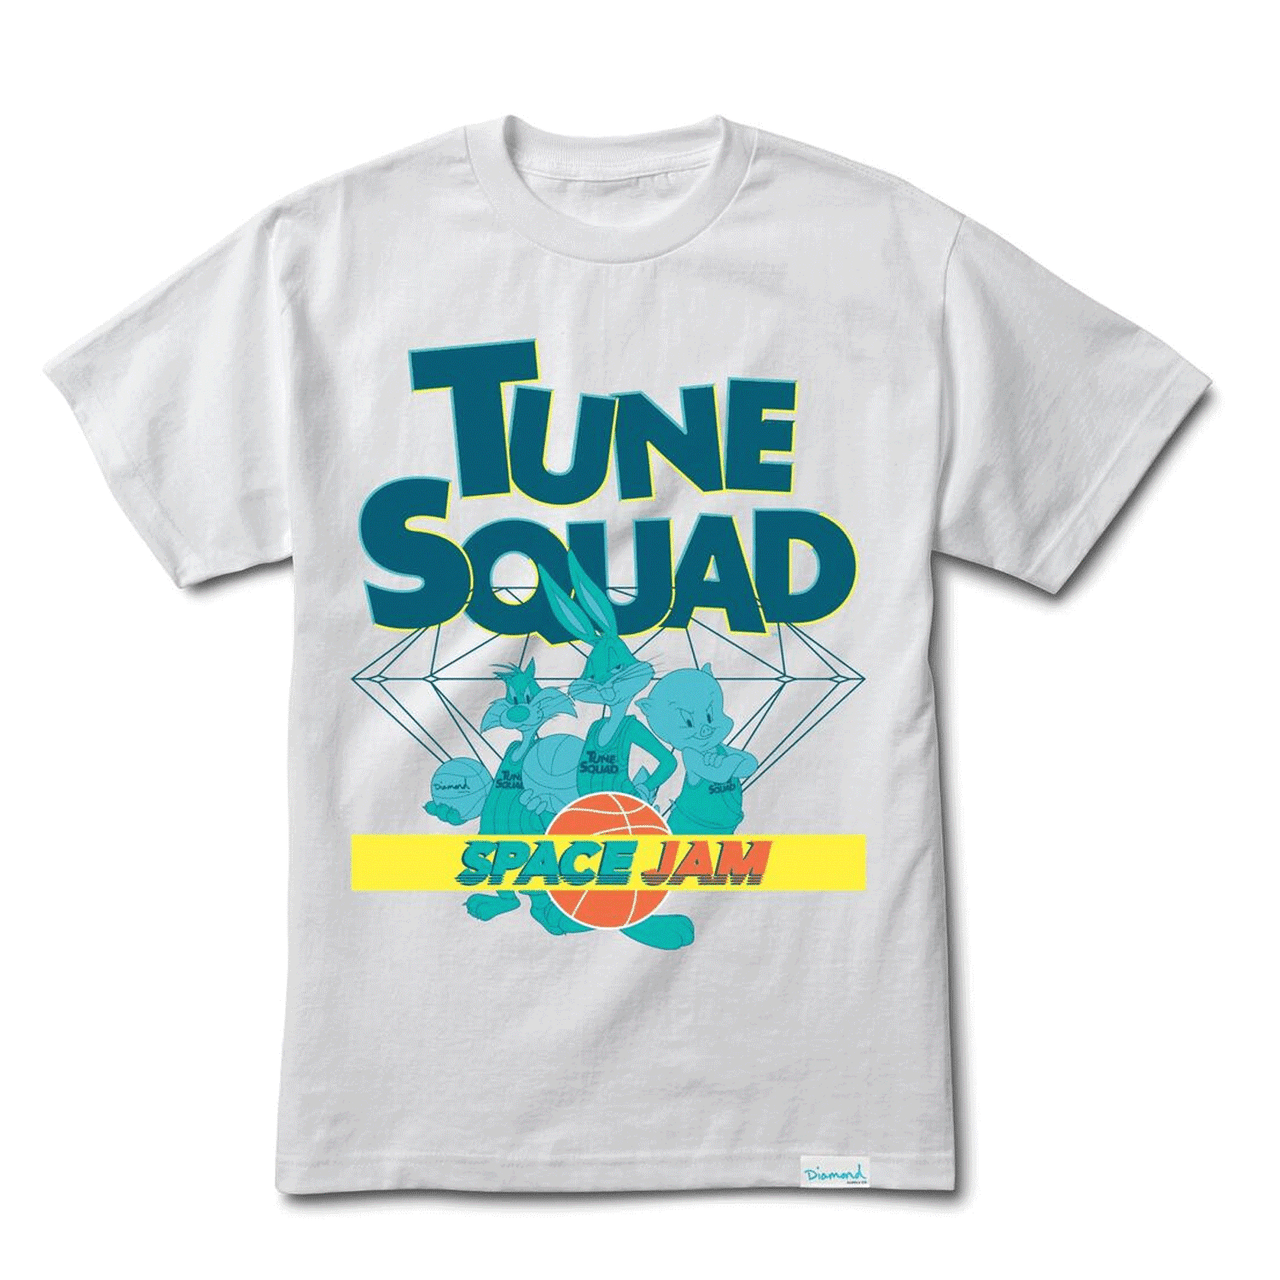 Space Jam 2 Tune Squad Light Blue Tee Shirt